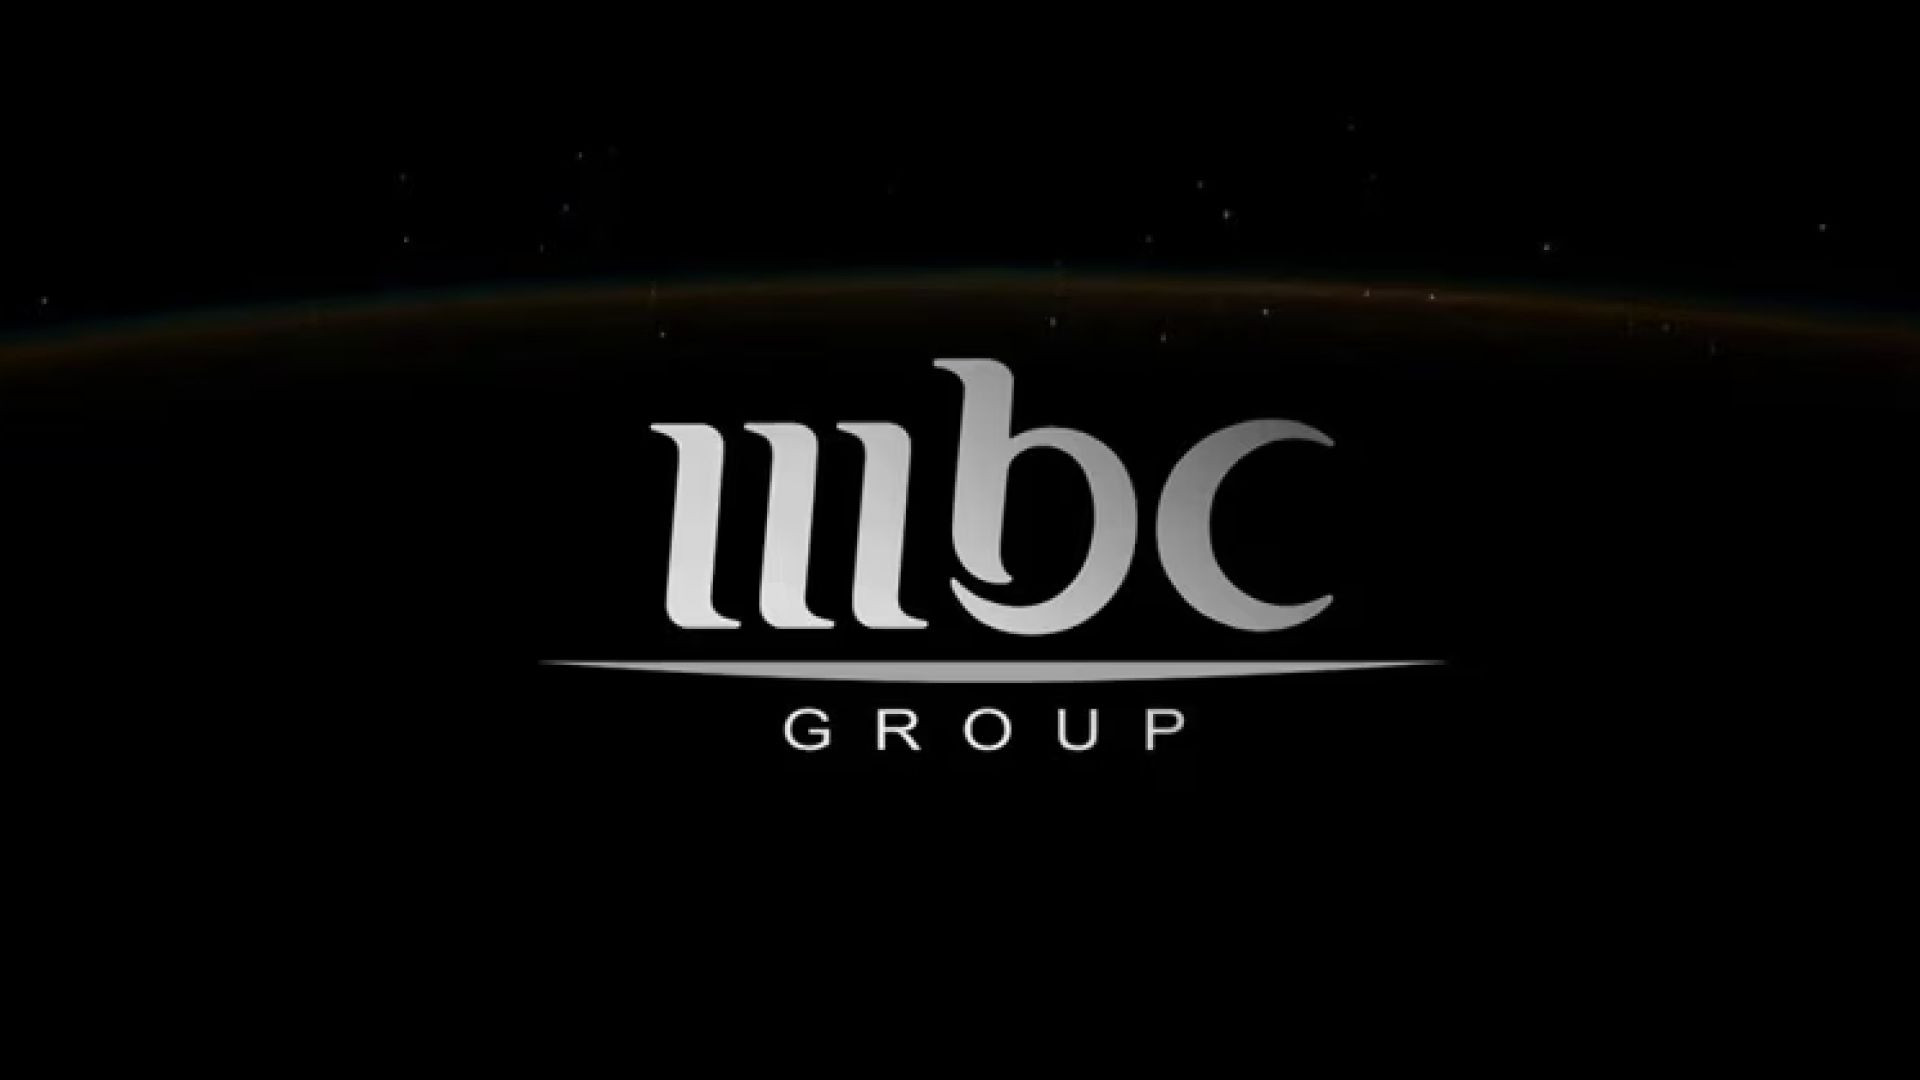 MBC HD